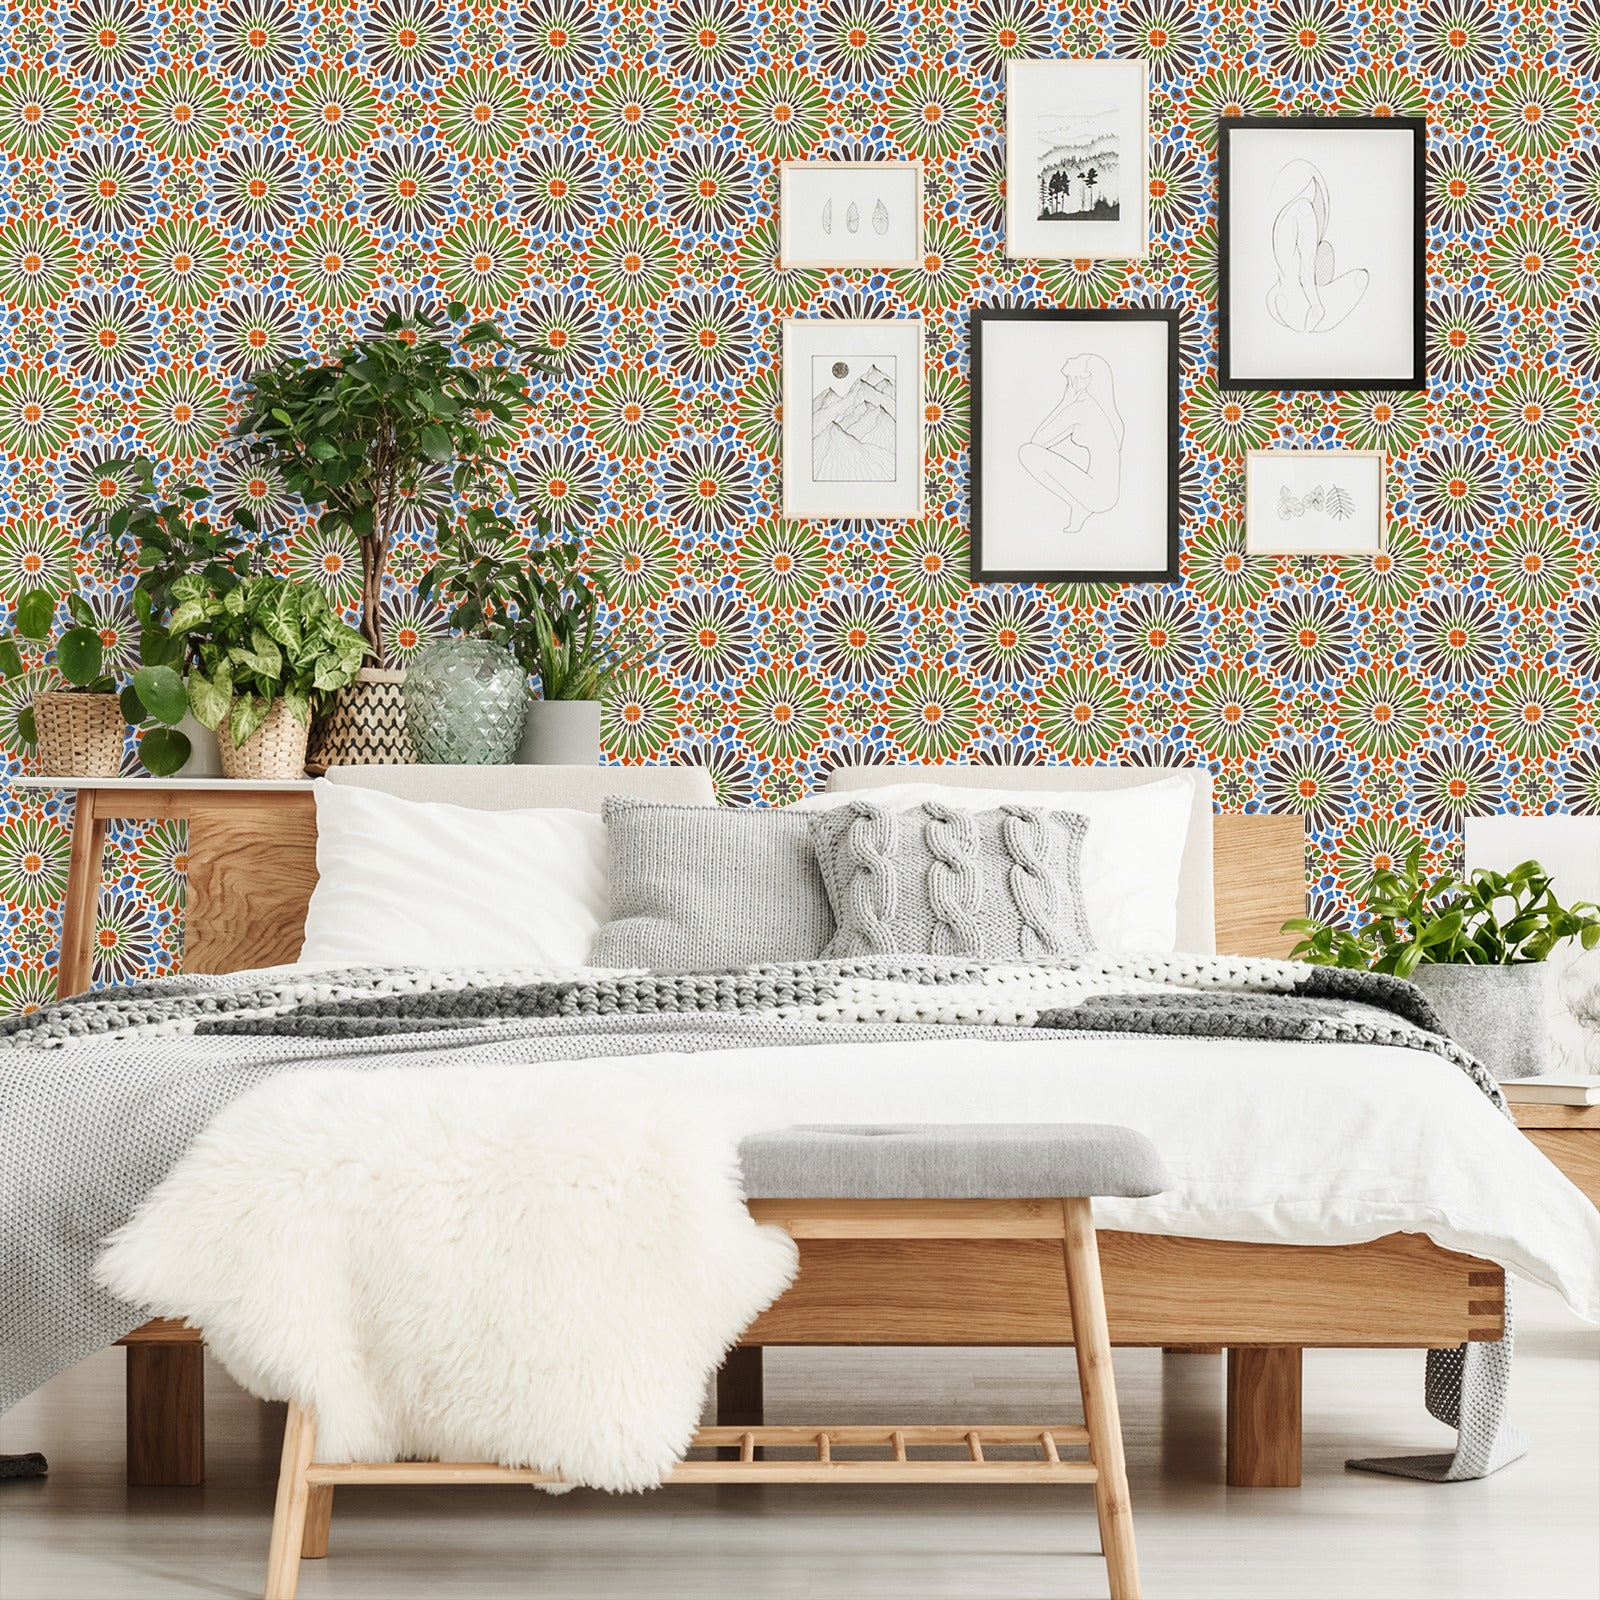 18' L x 24" W Peel & Stick Wallpaper Roll - Moroccan Tiles by DecoWorks - Wallpaper - Americanflat